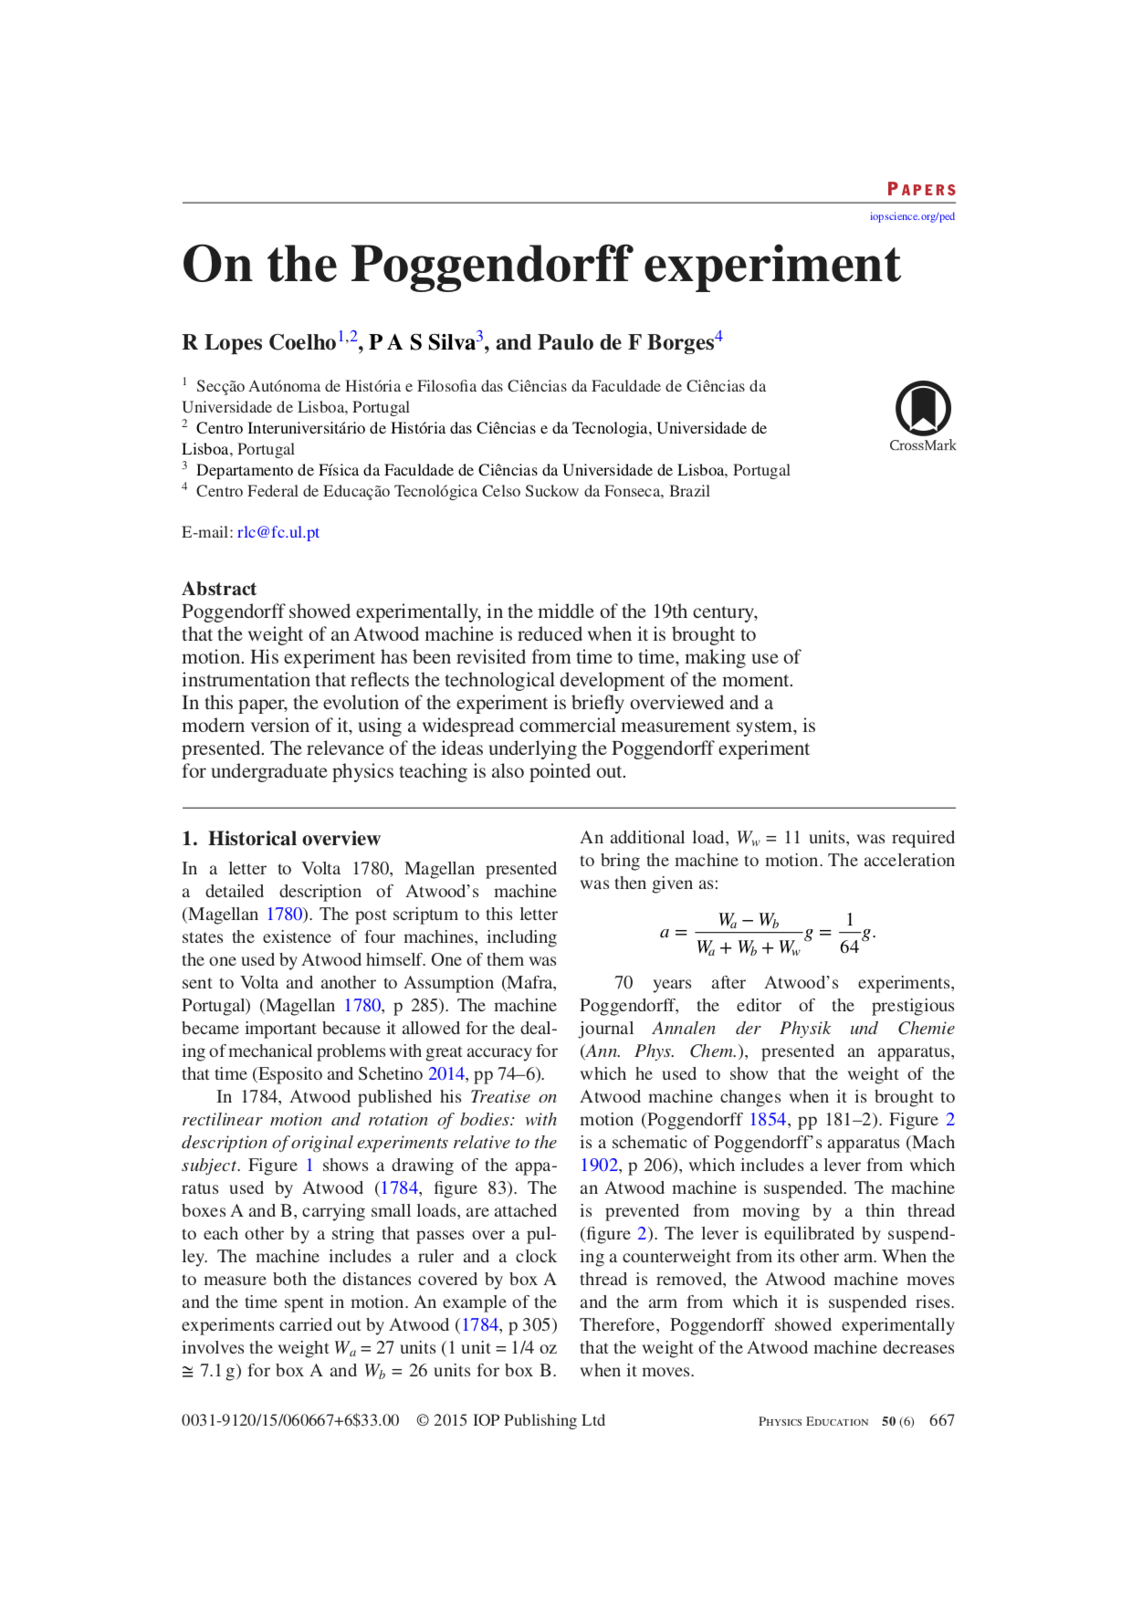 On the Poggendorff Experiment, Capa